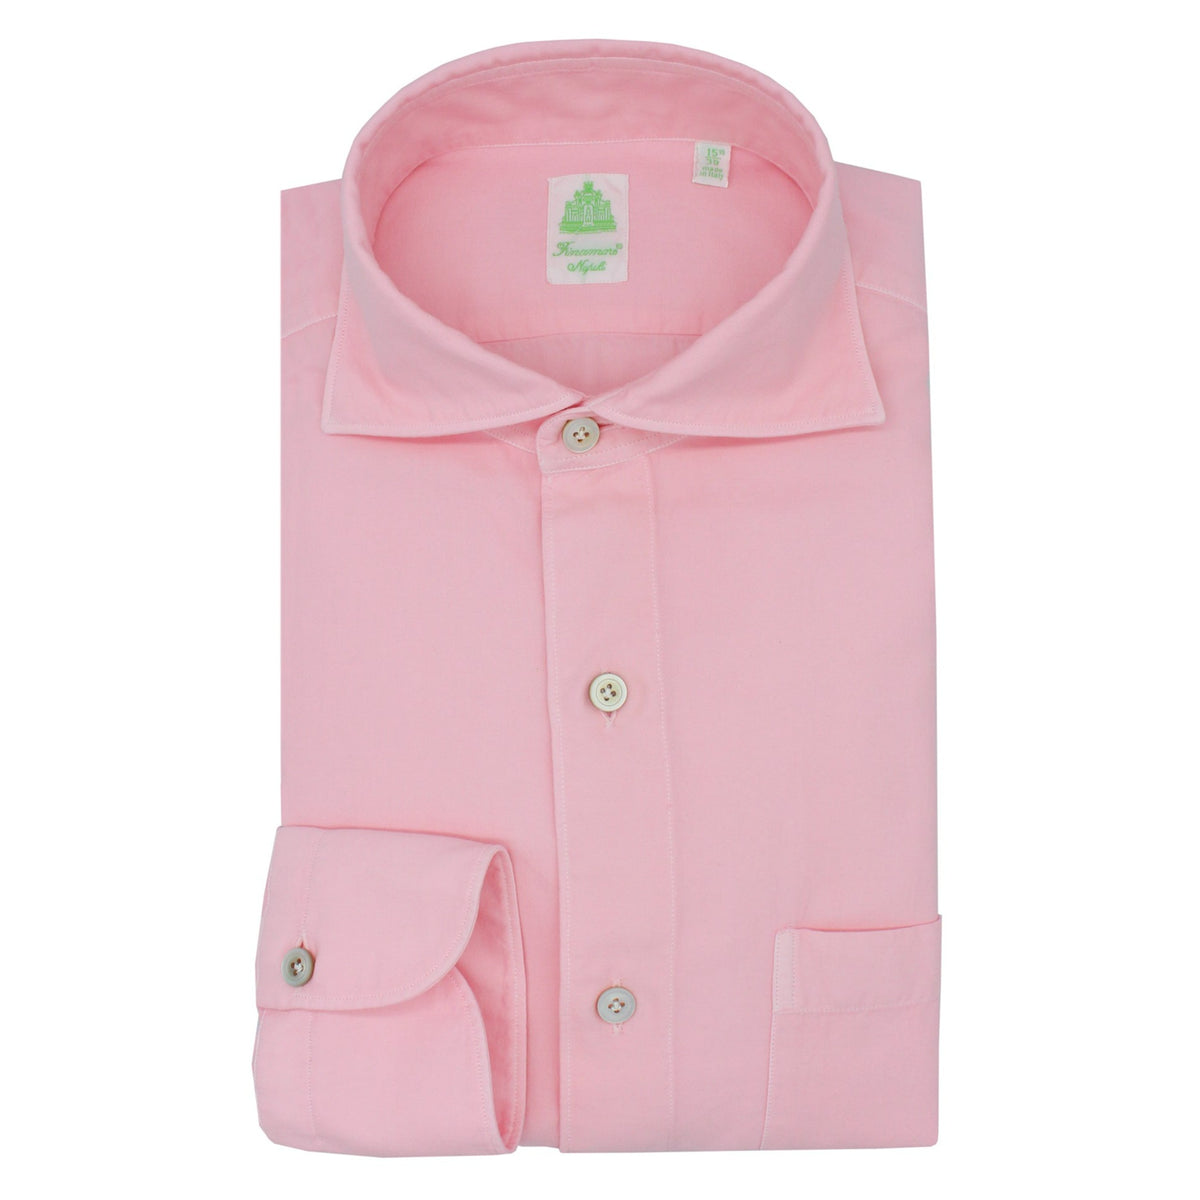 Tokyo slim fit pink garment dyed cotton shirt